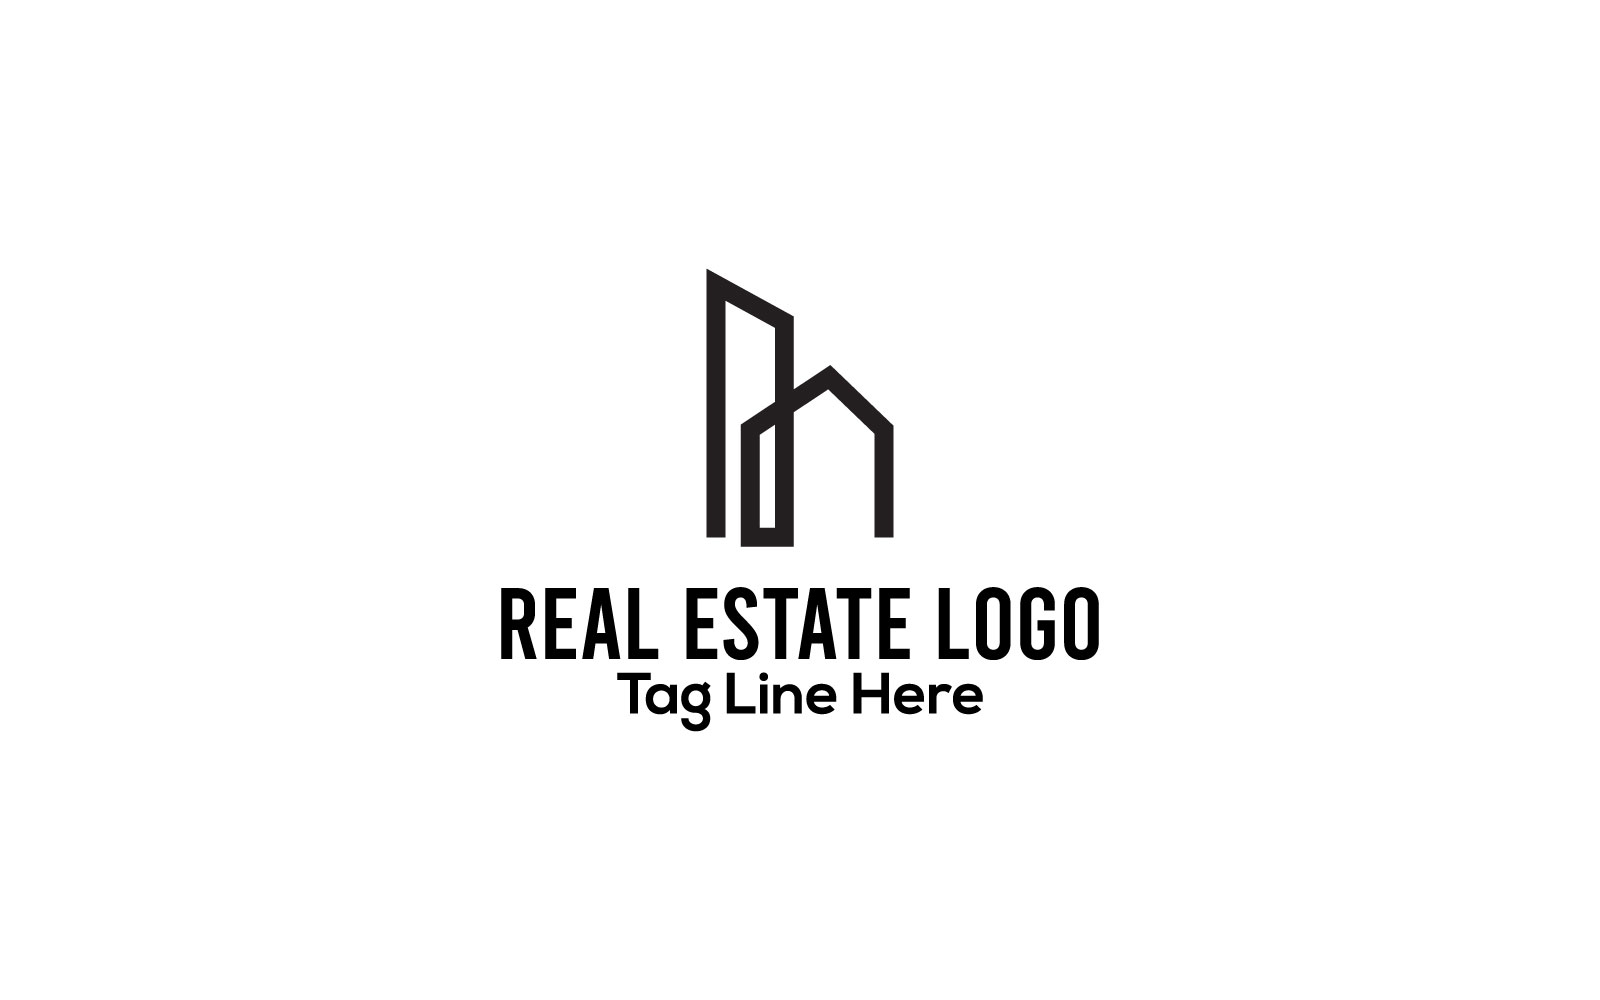 Real Estate Logo Design Template or housing logo